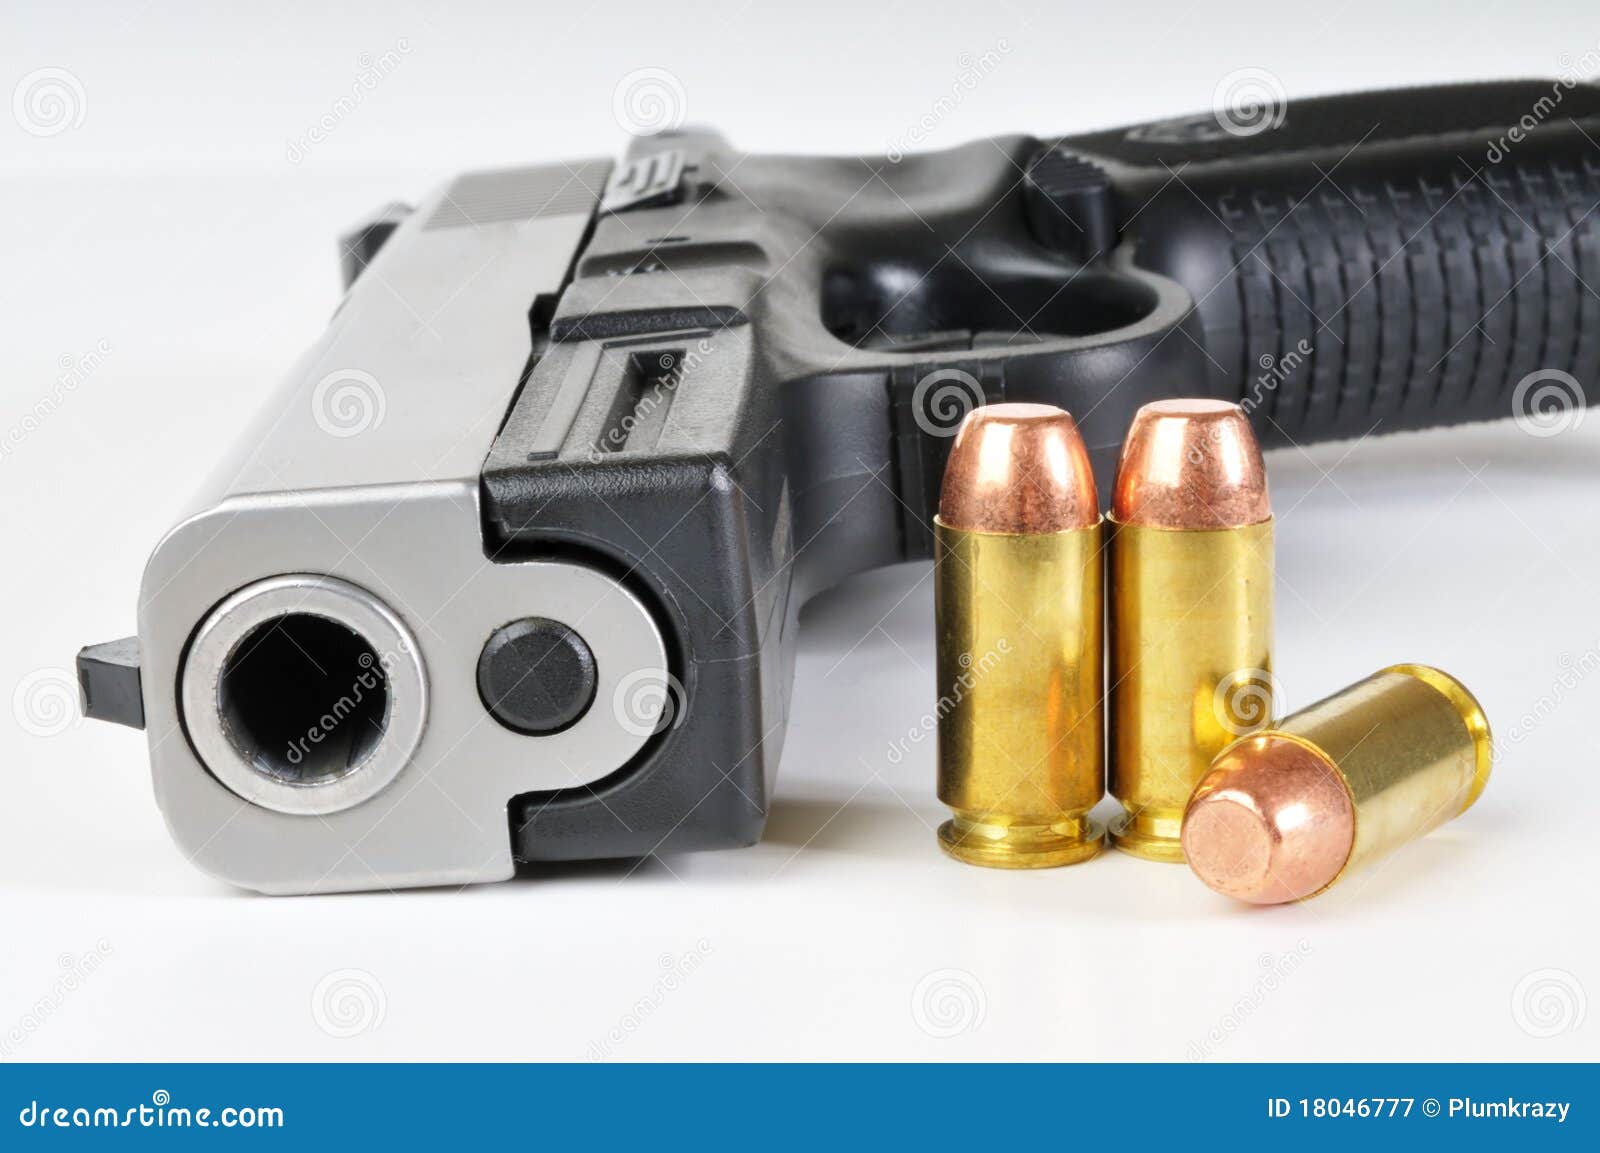 40 caliber firearm